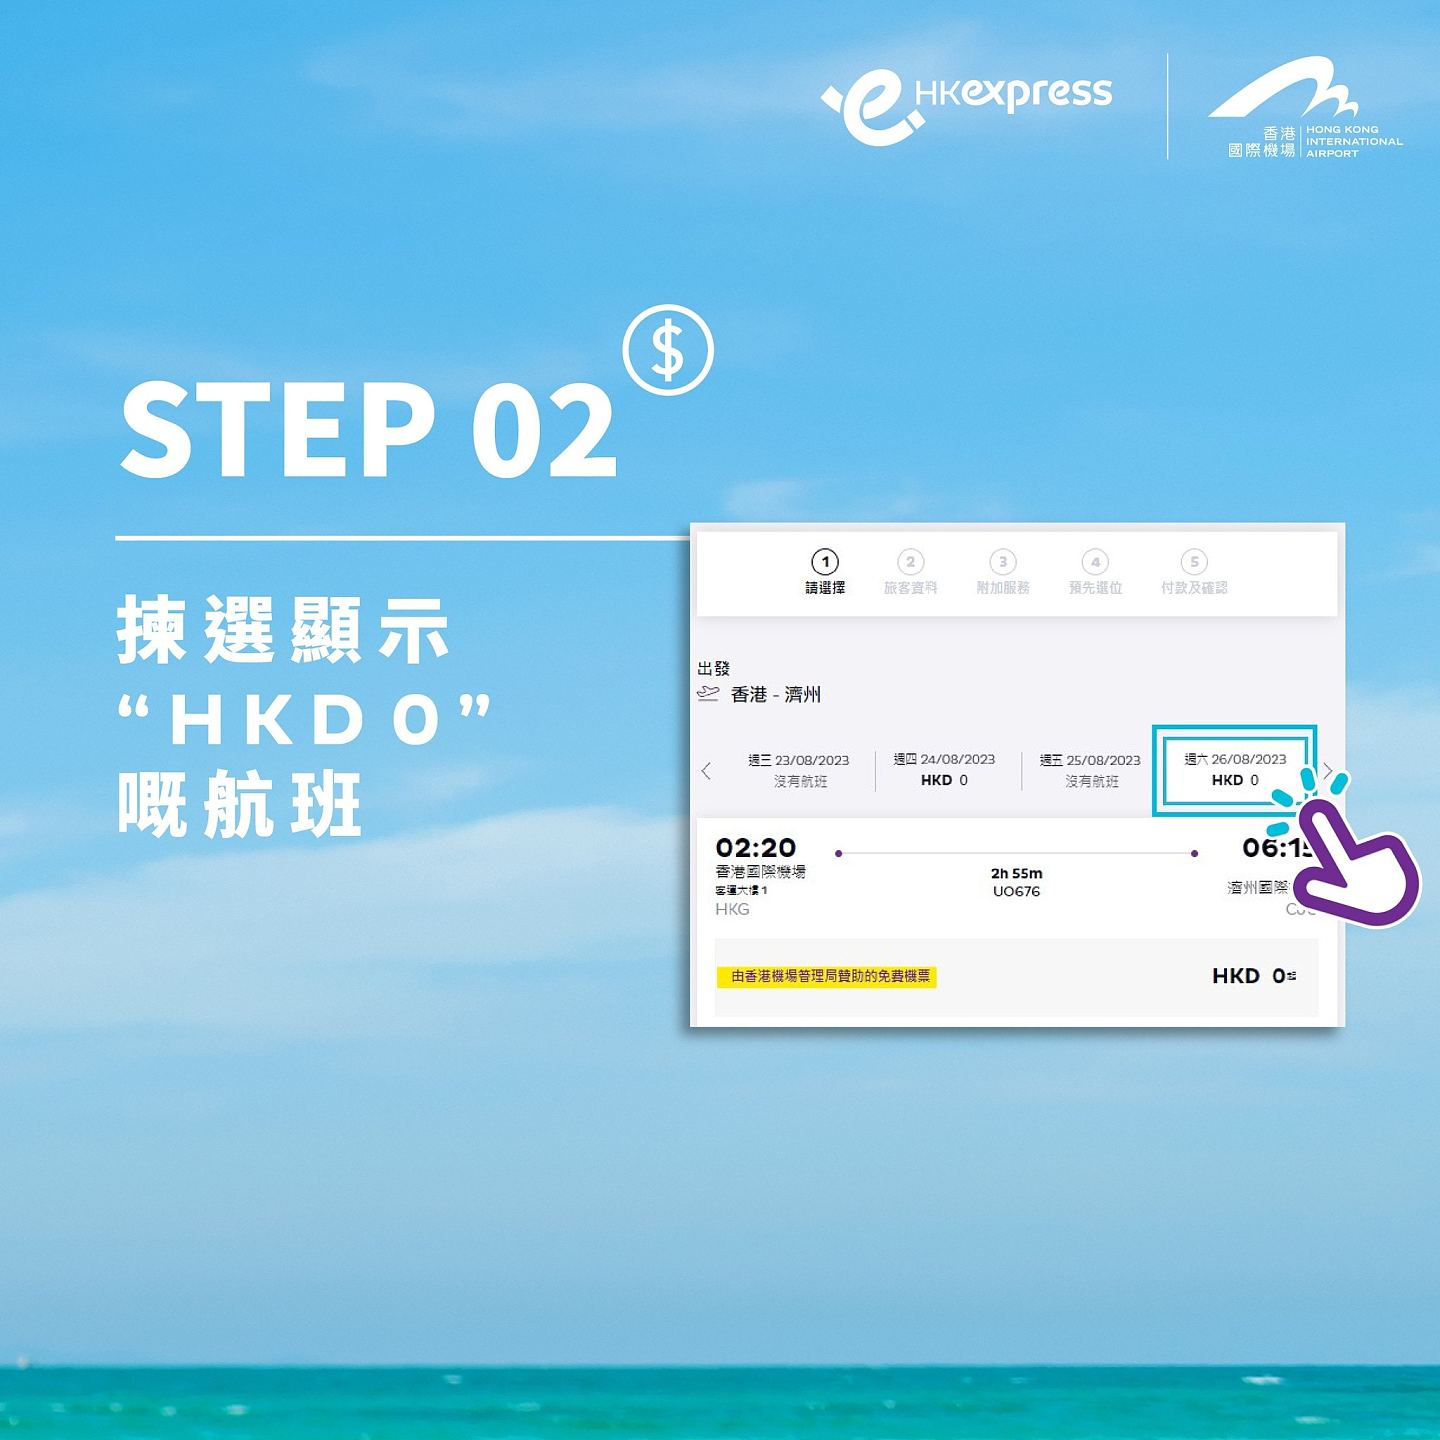 HK Express免费来回机票赠送！含19个亚洲城市！3步骤获取“0”元购机票（组图） - 4